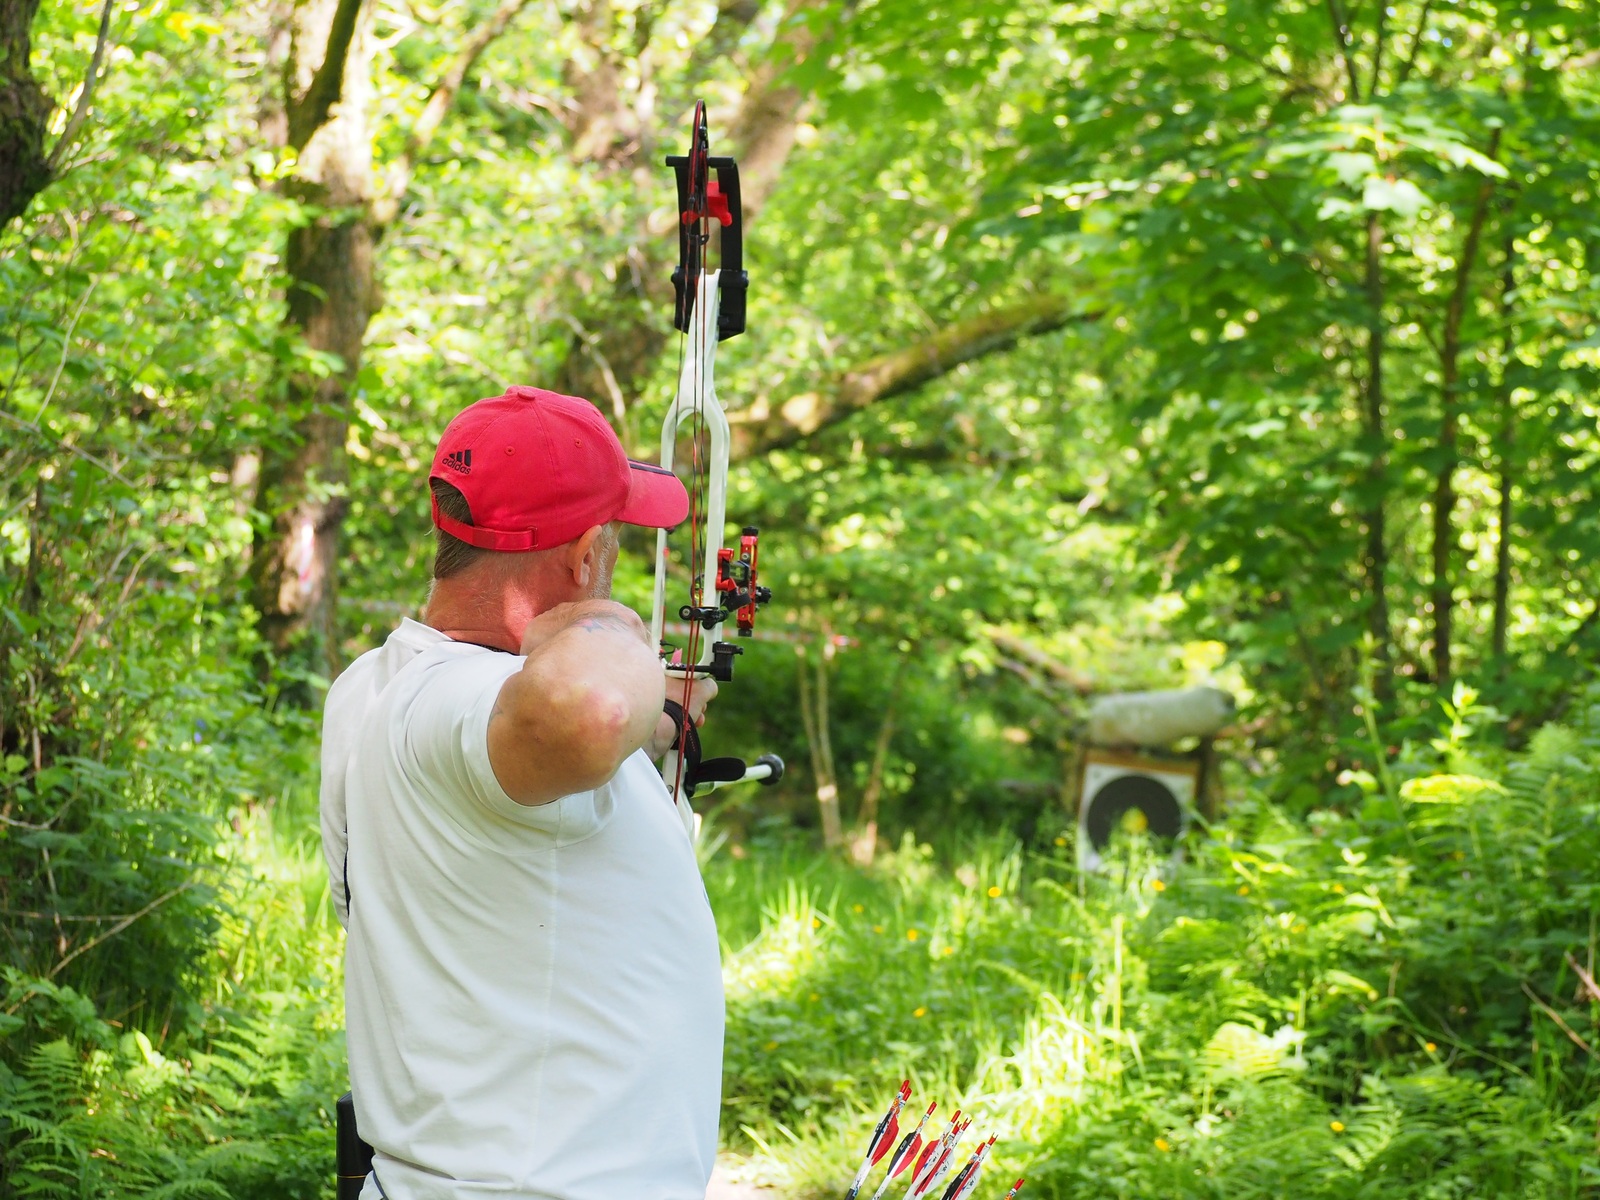 Field archery course